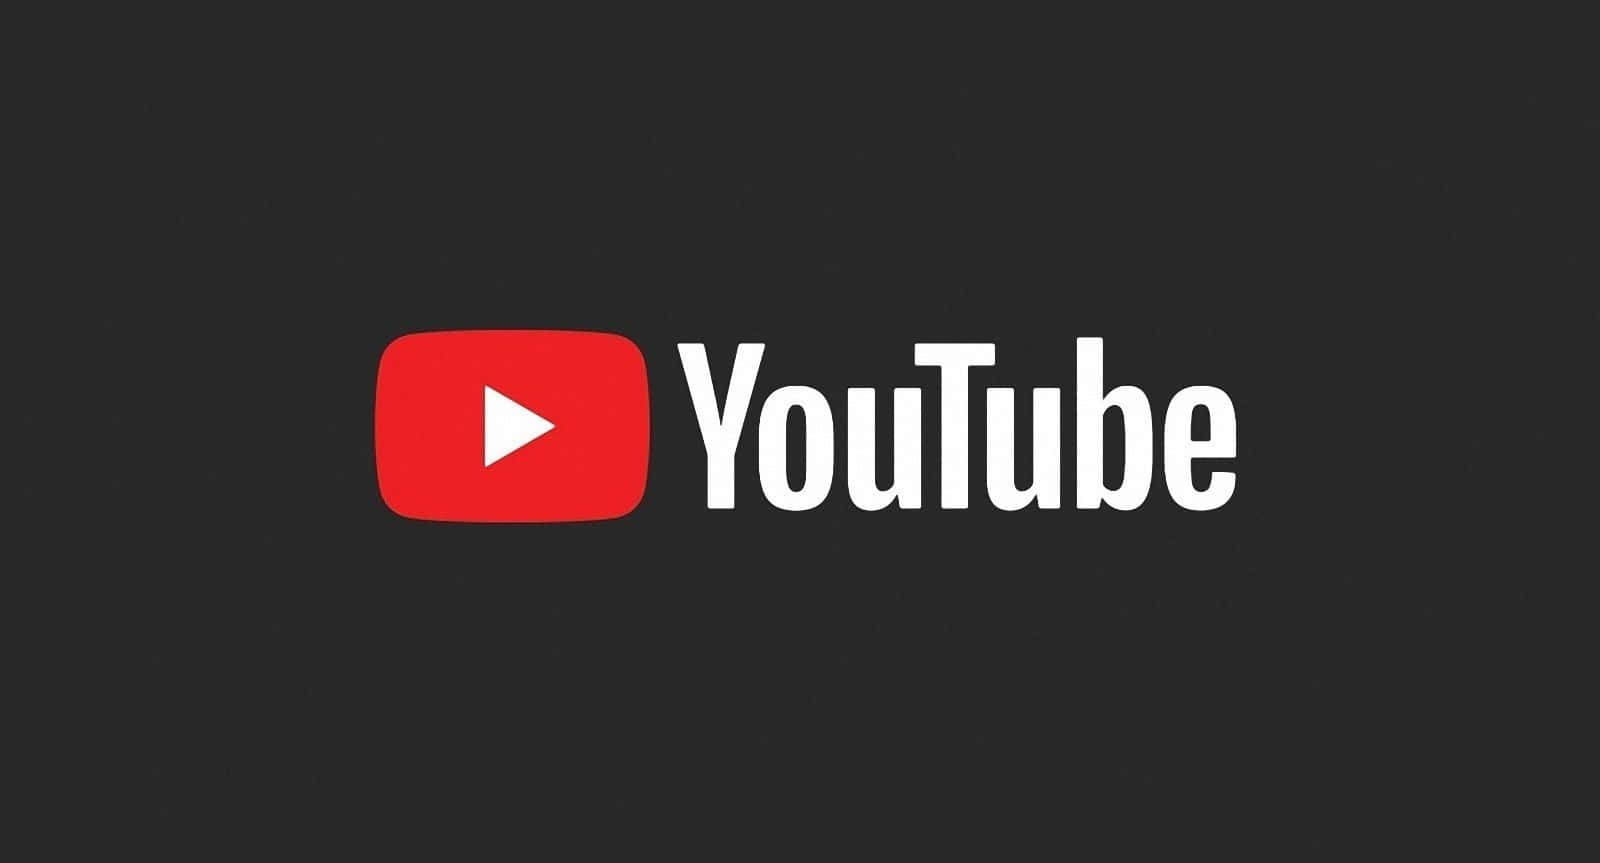 The iconic YouTube logo against a black background